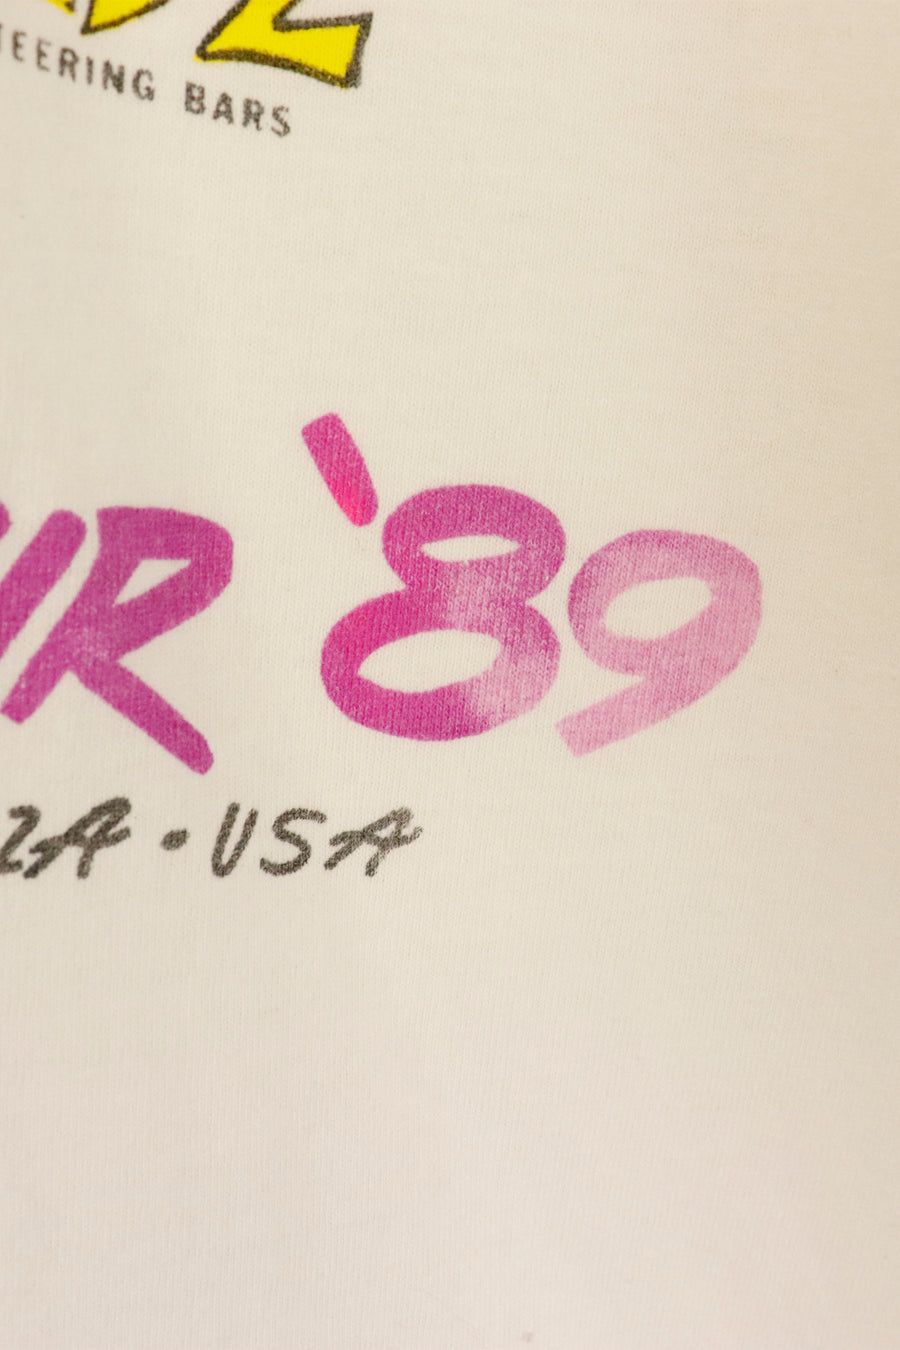 Vintage 1989 Cycle Craft World Tour Brazil Austrailia USA Neon Graphic T Shirt Sz L